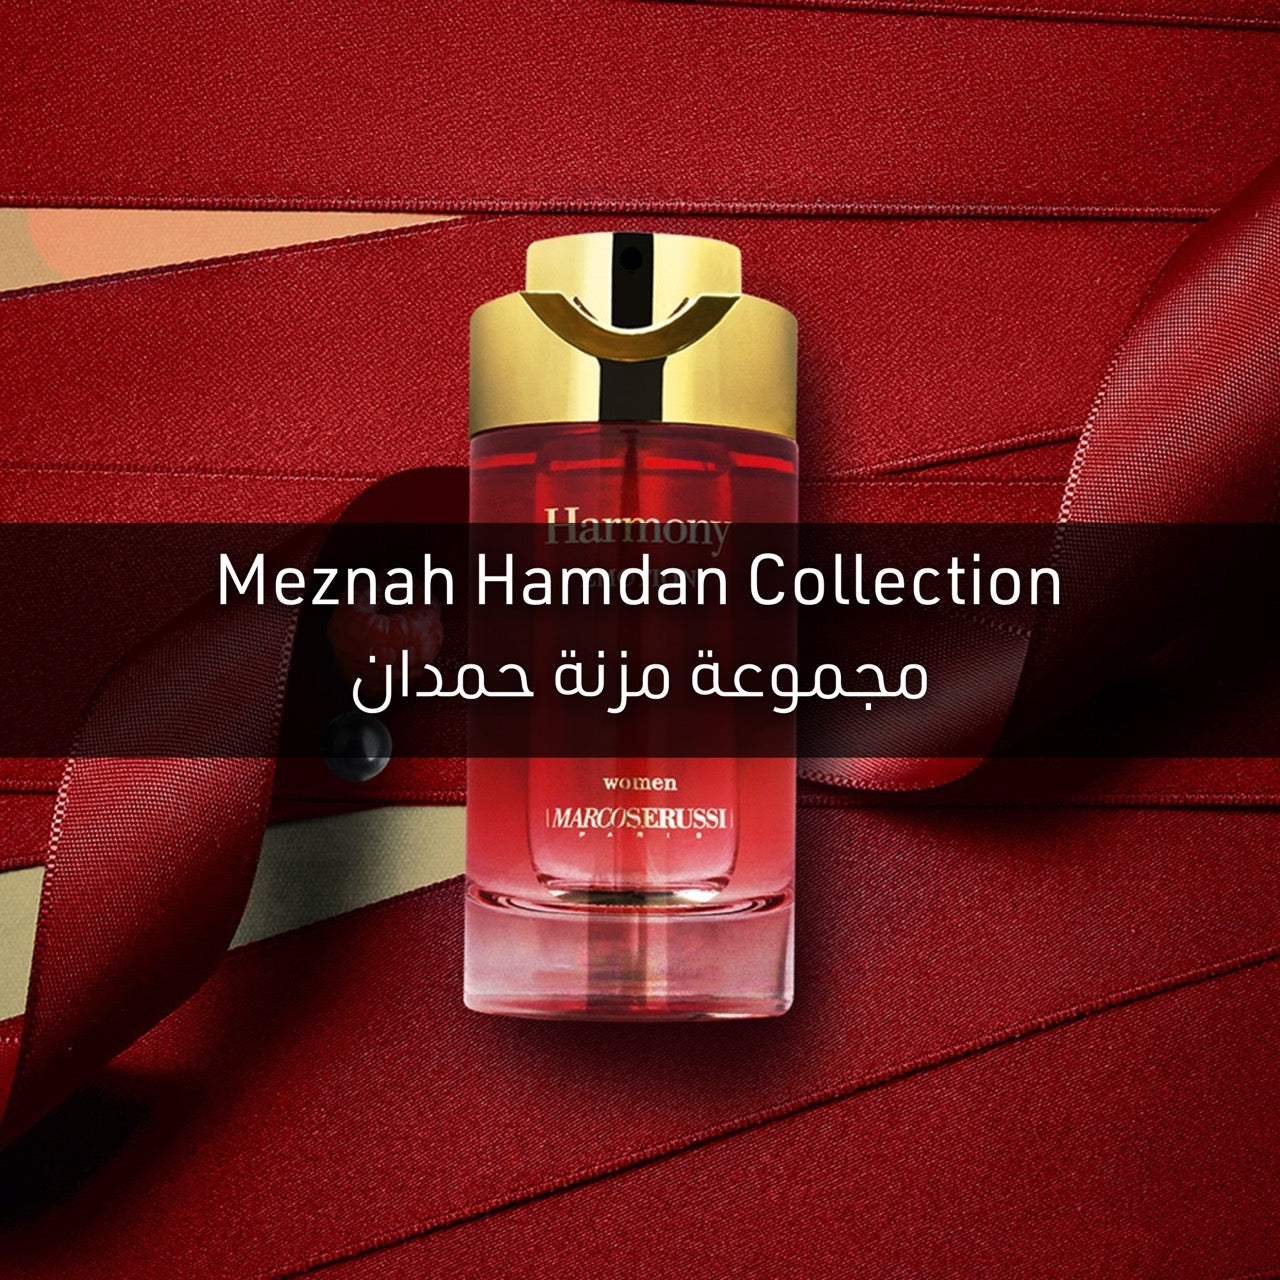 Meznah Hamdan Collection